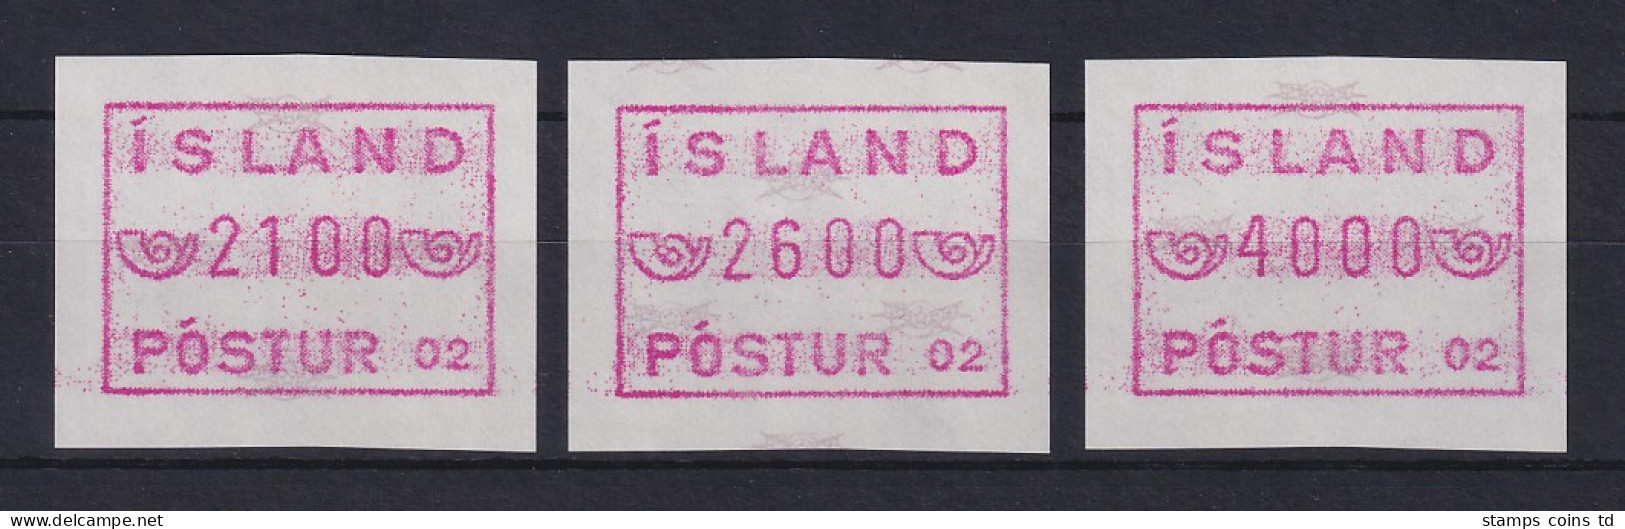 Island Frama-ATM  Aut.-Nr. 02, Mi.-Nr. 1.2 D Satz 2100-2600-4000 ** (1989) - Franking Labels